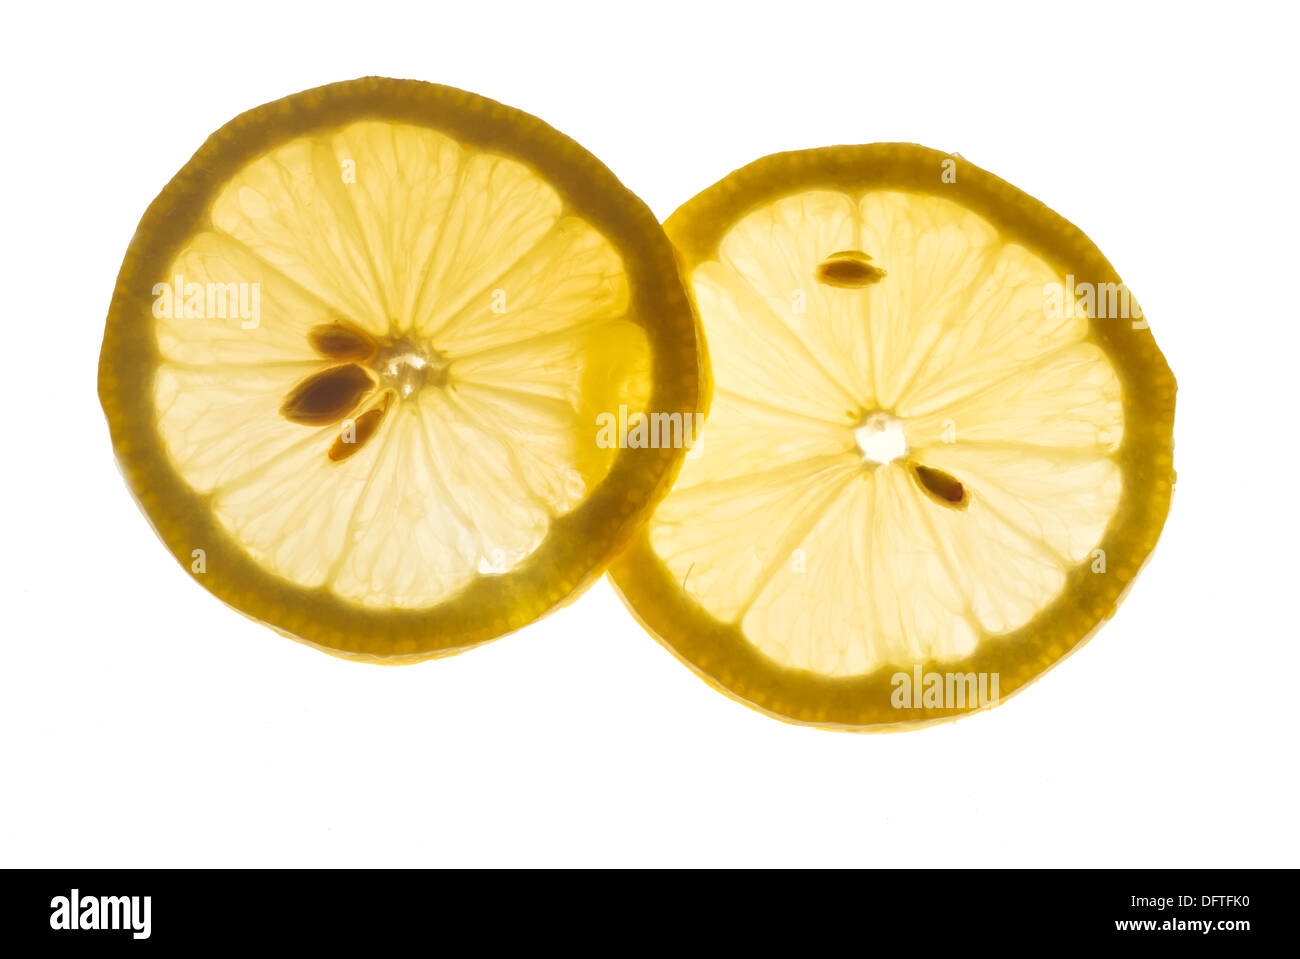 Pair of lemon slice isolated on white. Stock Photo